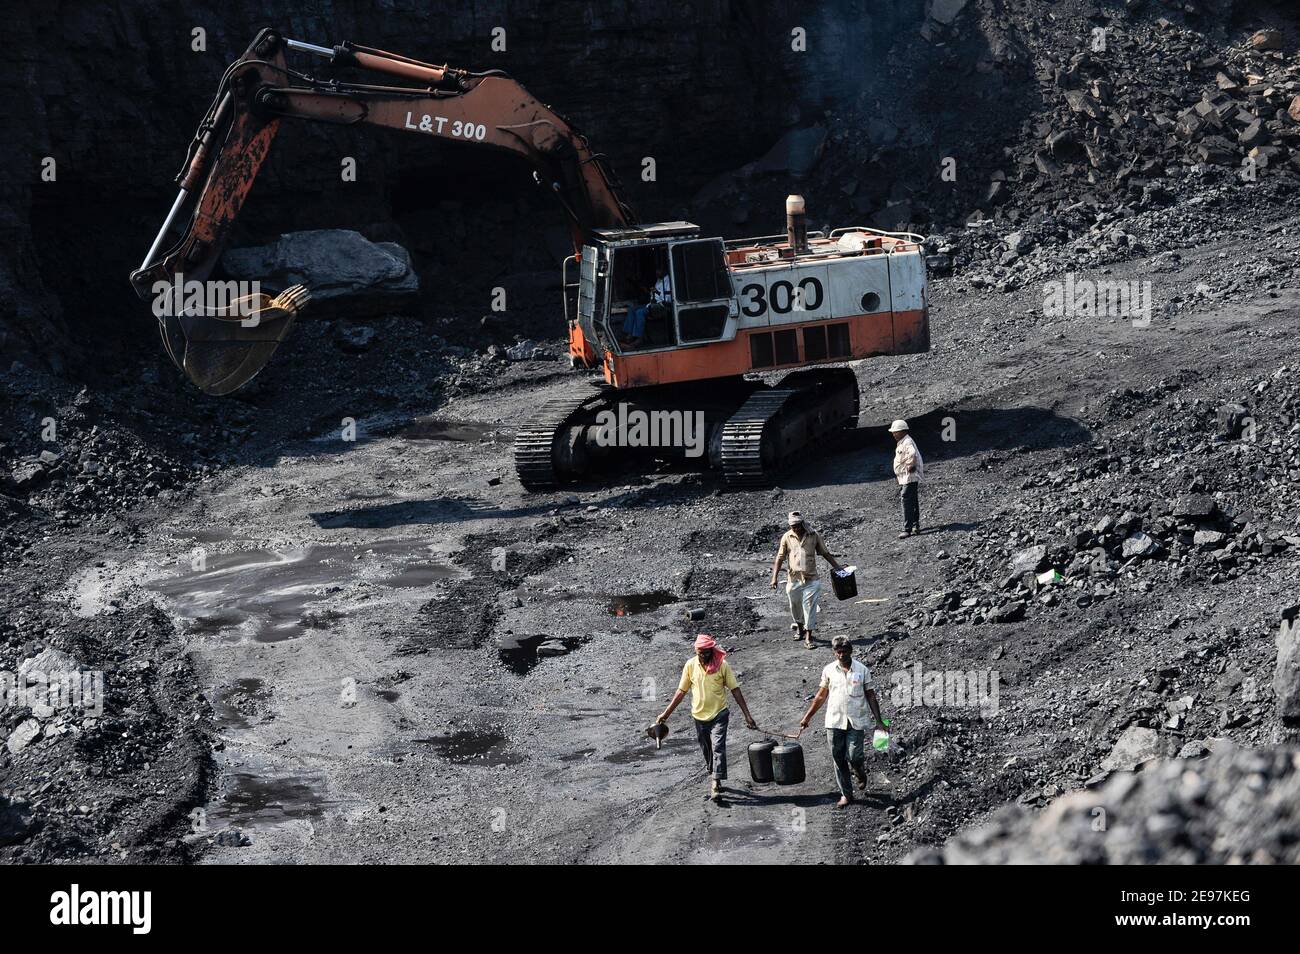 INDIEN Dhanbad, Tagebau von BCCL Ltd a company of COAL INDIA , L&T Digger / INDIEN Dhanbad , offener Kohle Tagebau von BCCL Ltd. Ein Tochterunternehmen von Coal India Stockfoto